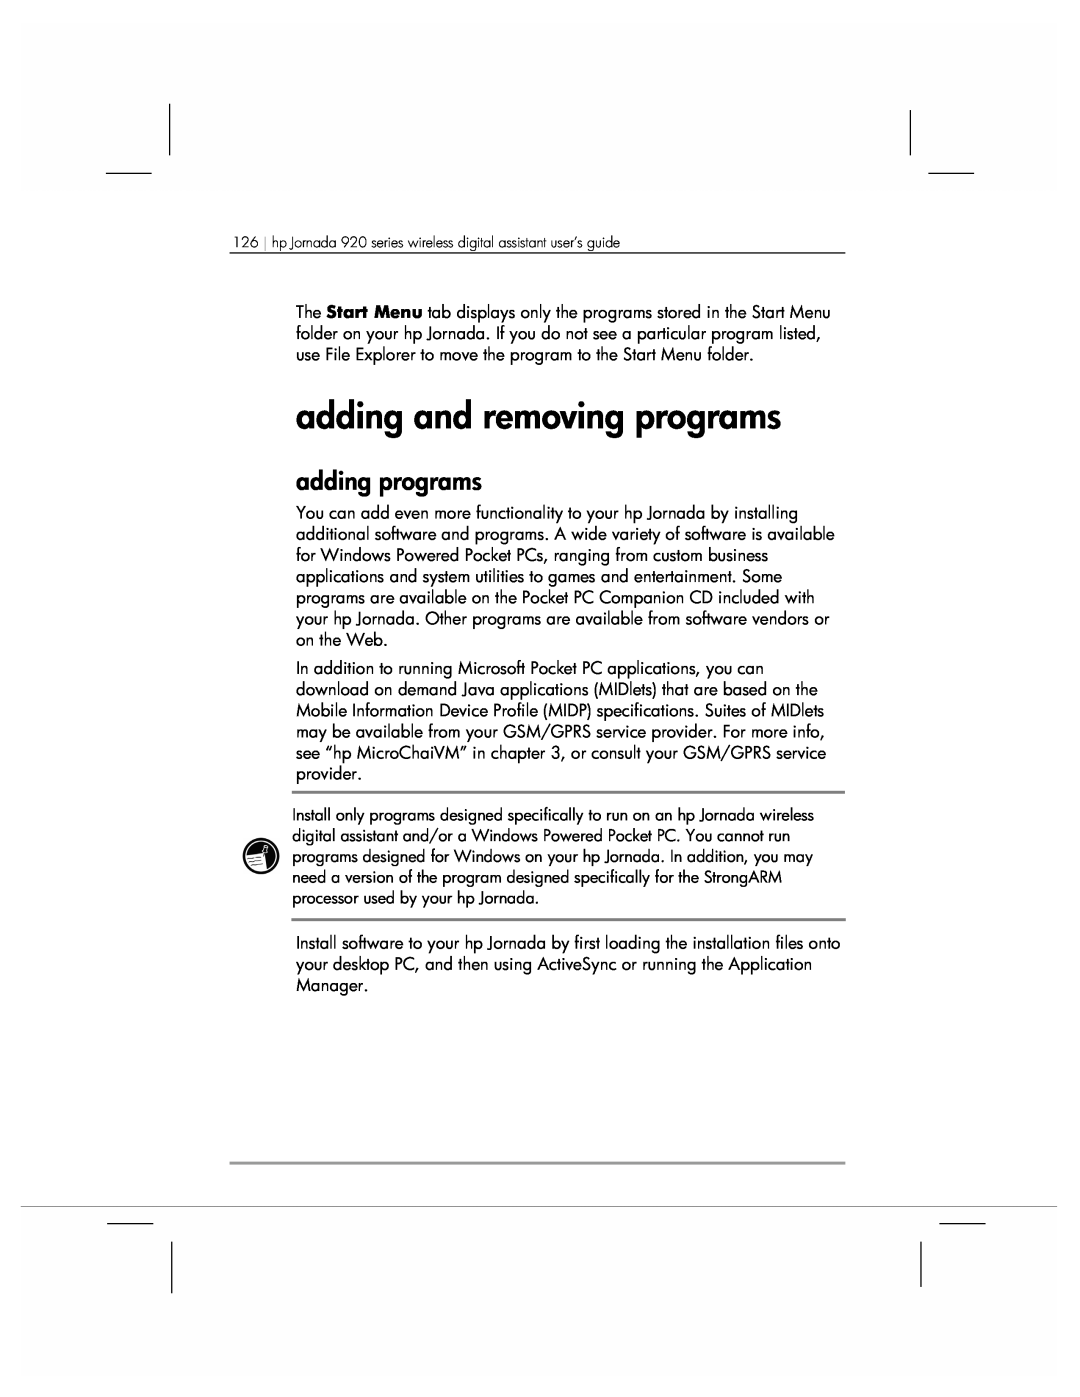 HP 920 manual adding and removing programs, adding programs 